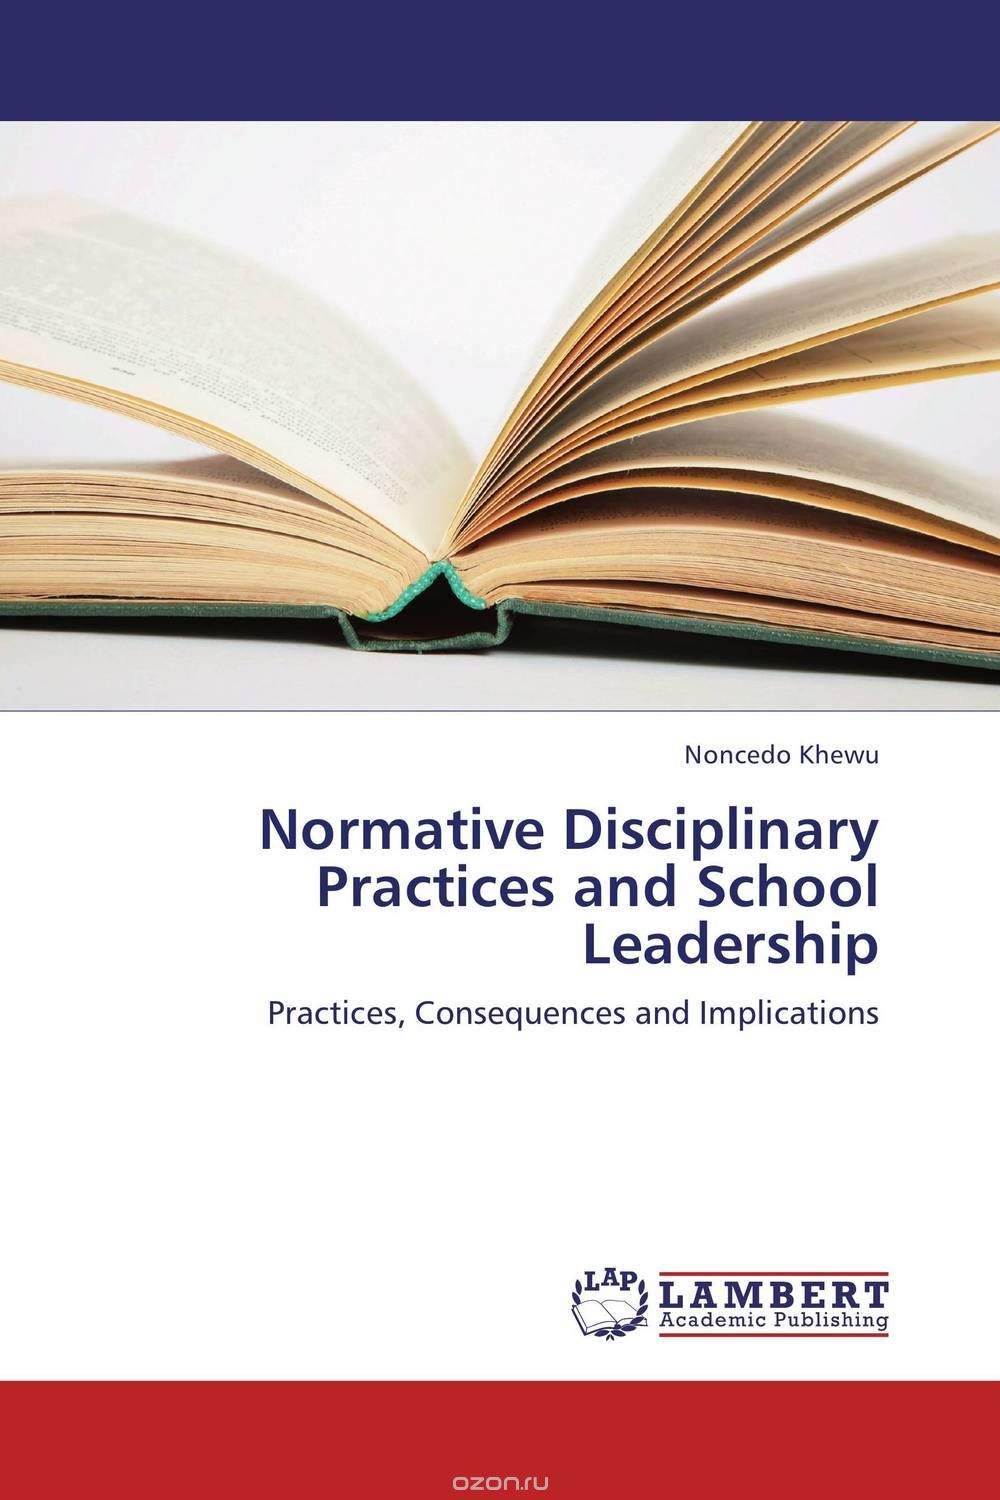 Скачать книгу "Normative Disciplinary Practices and School Leadership"